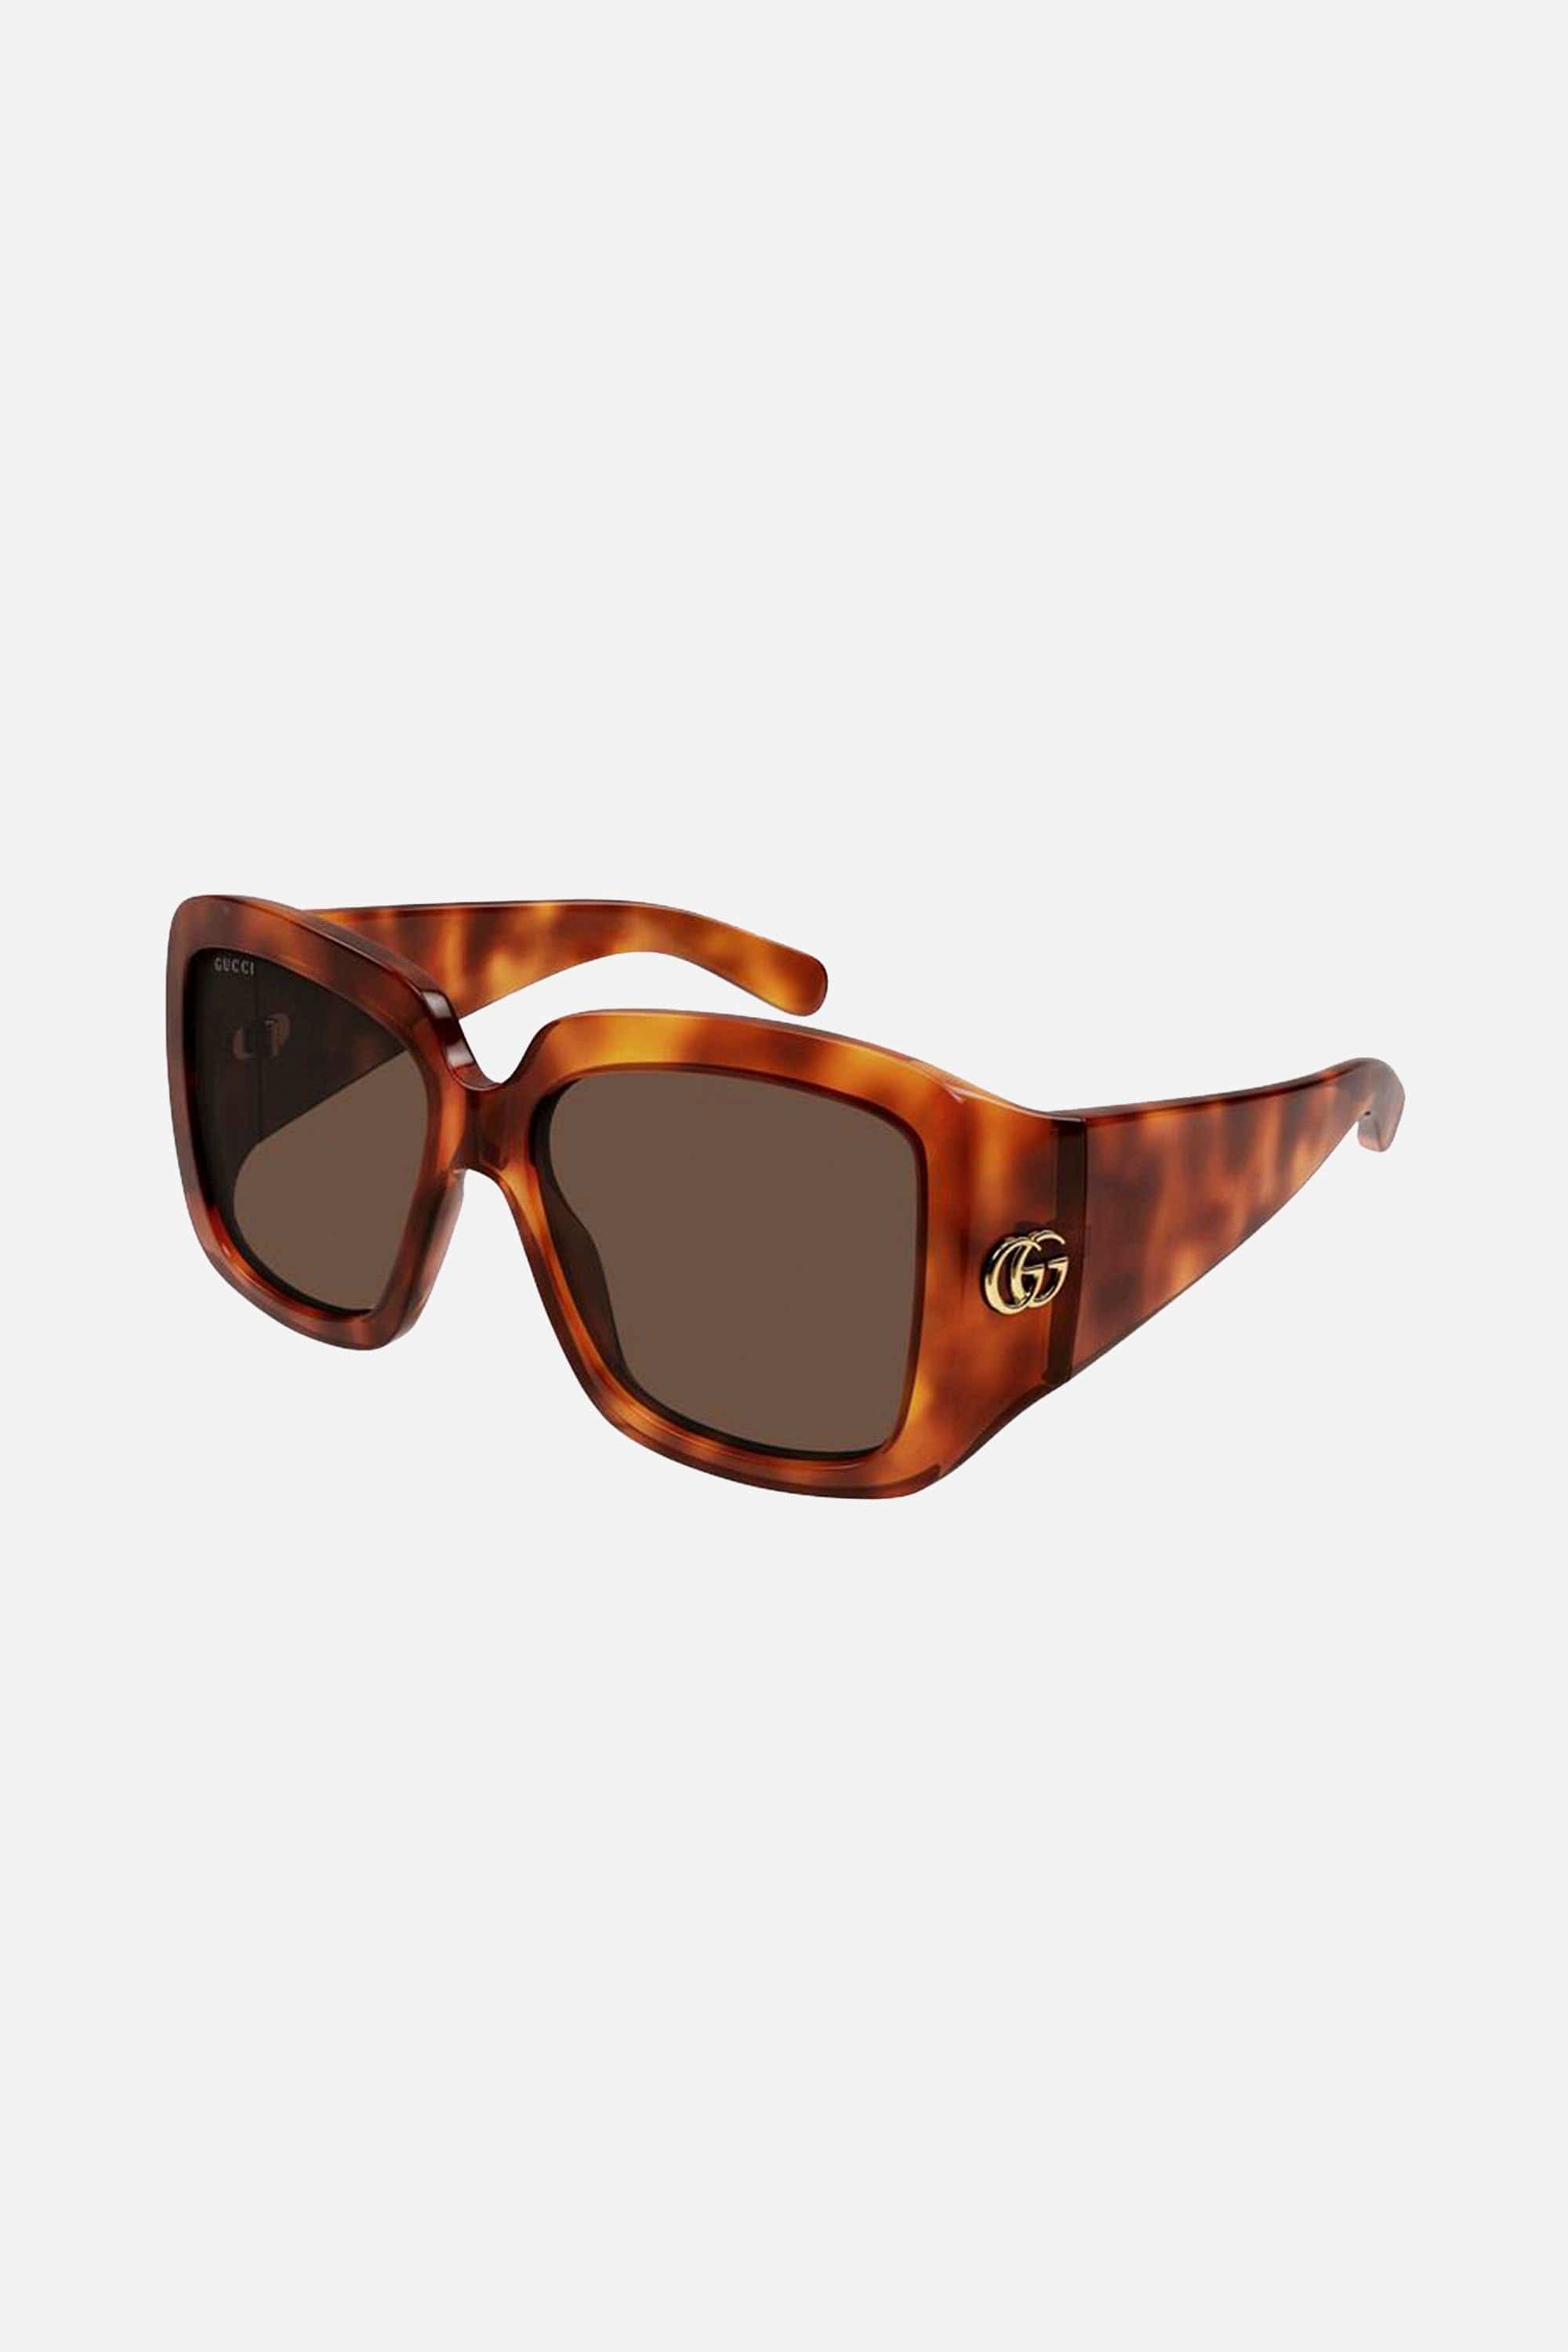 Gucci wrap around havana sunglasses - Eyewear Club